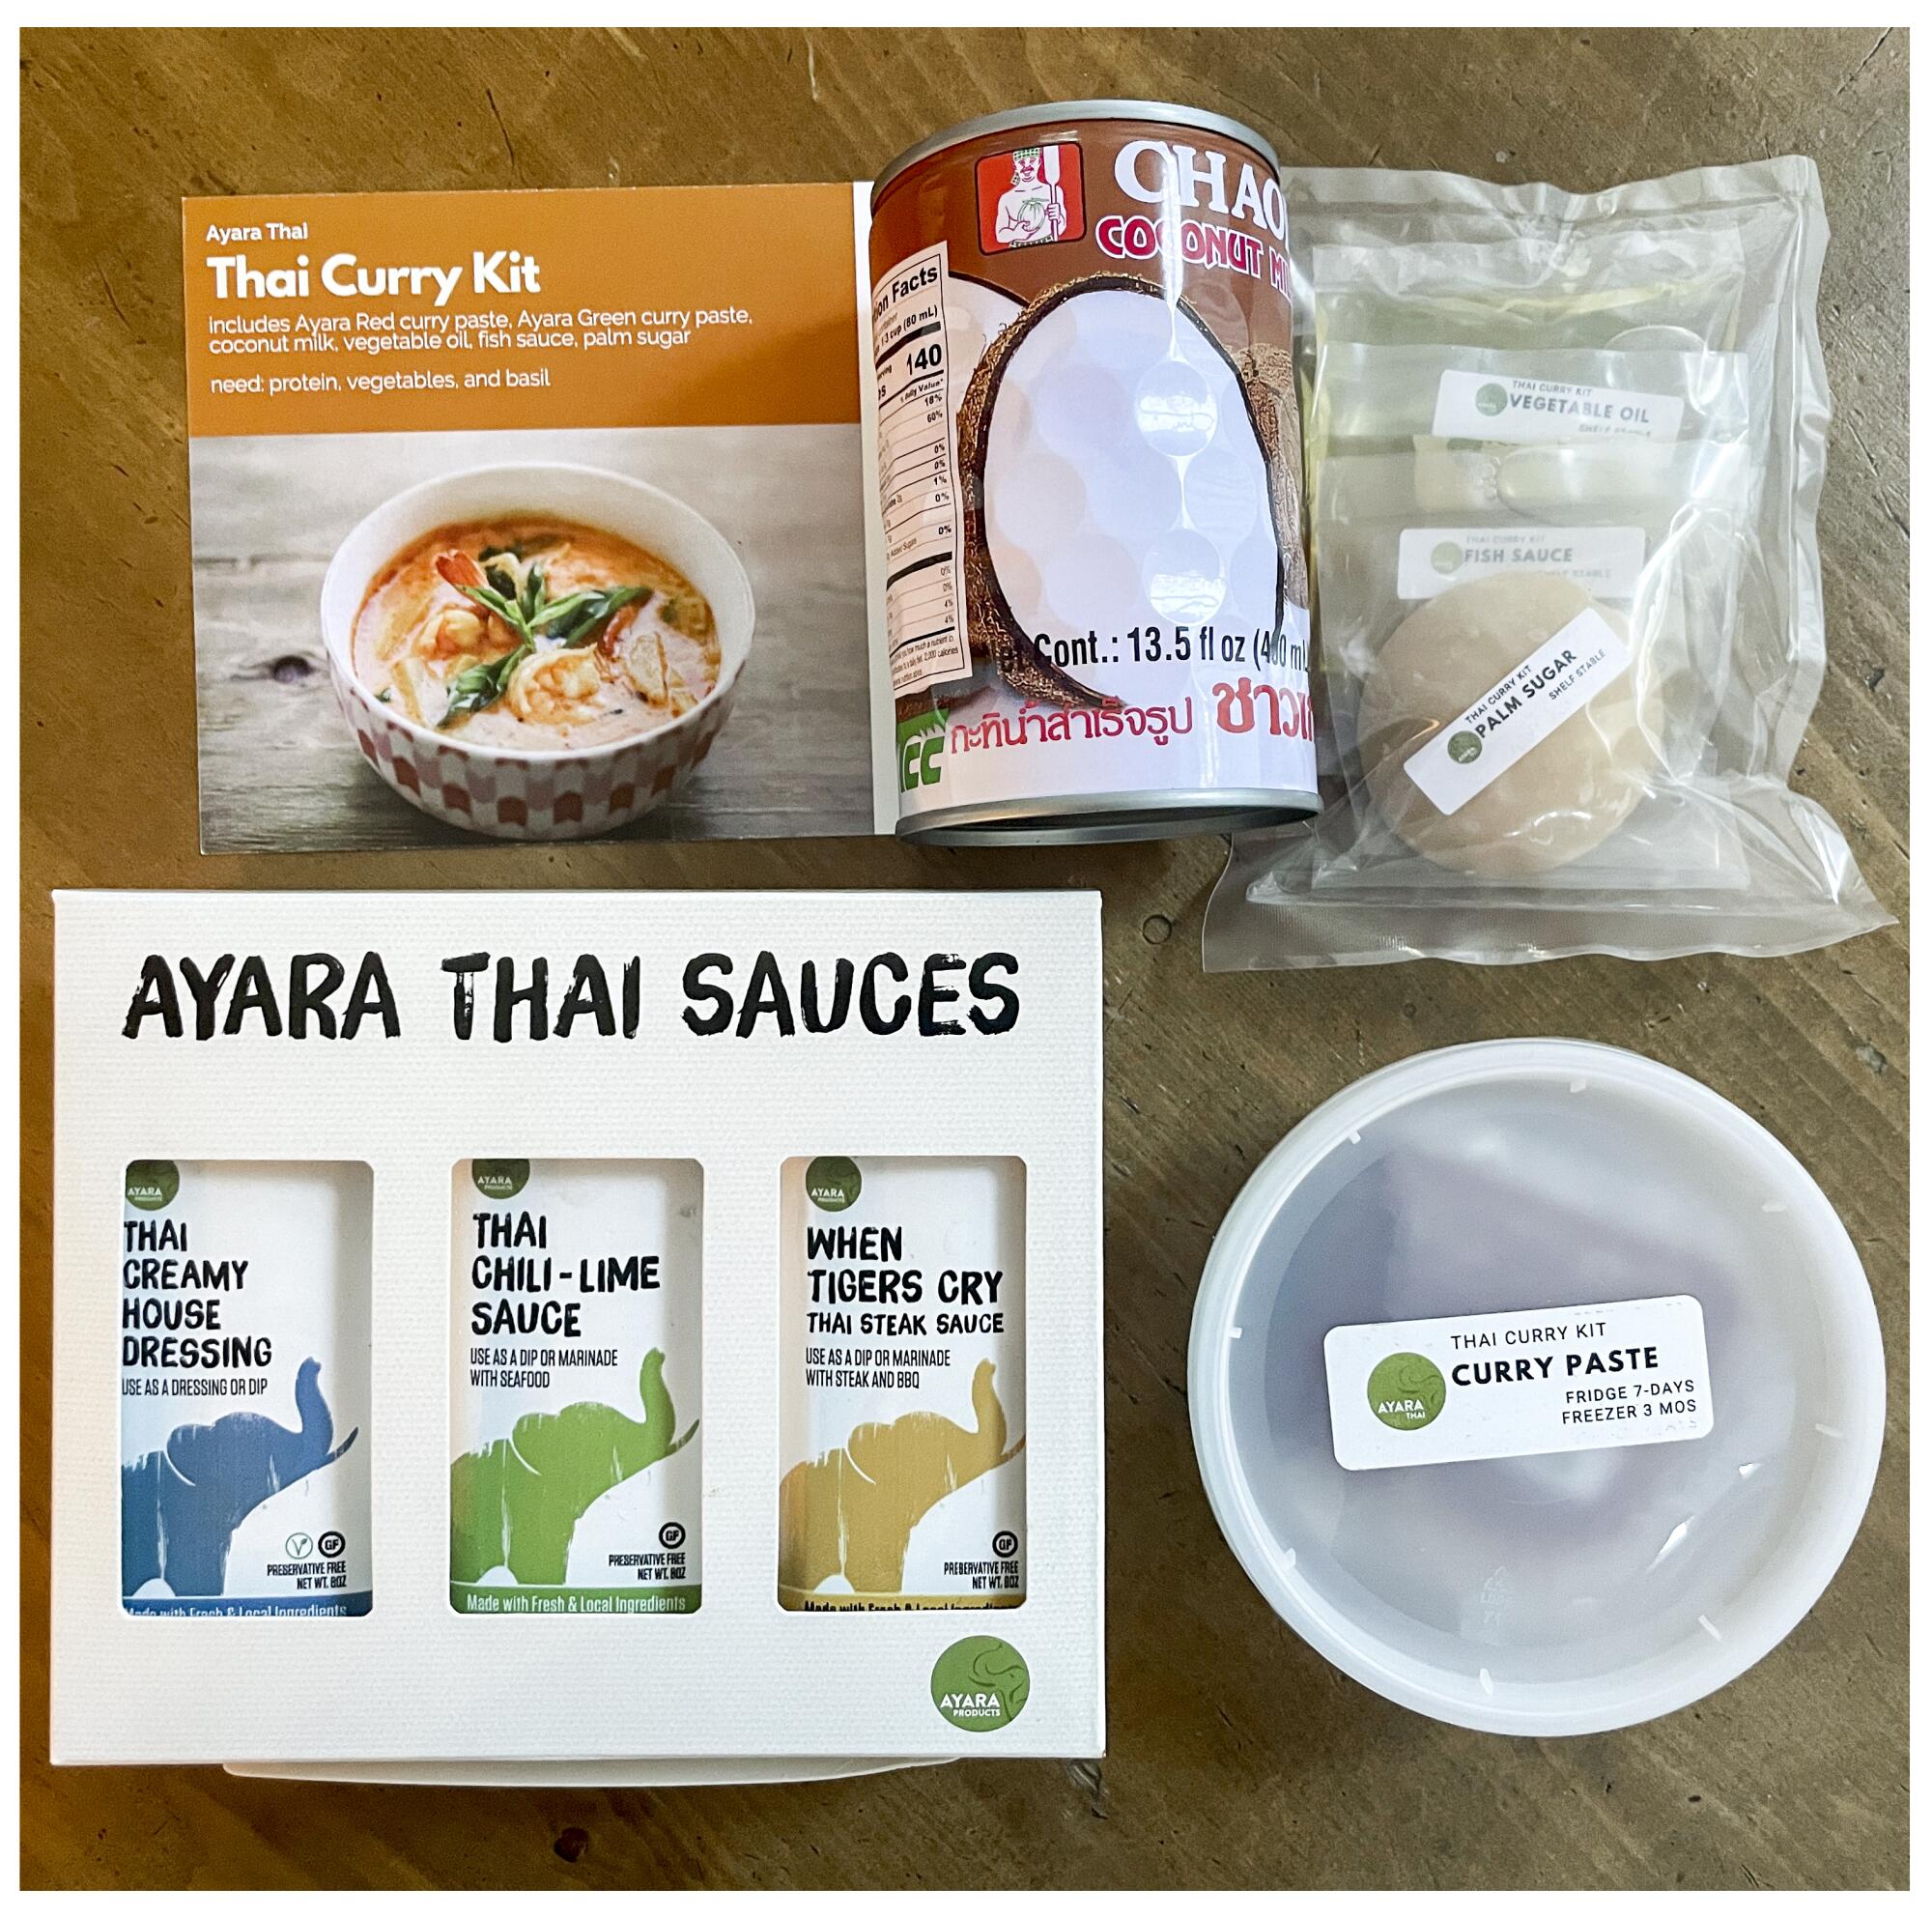 A curry kit from Ayara Thai